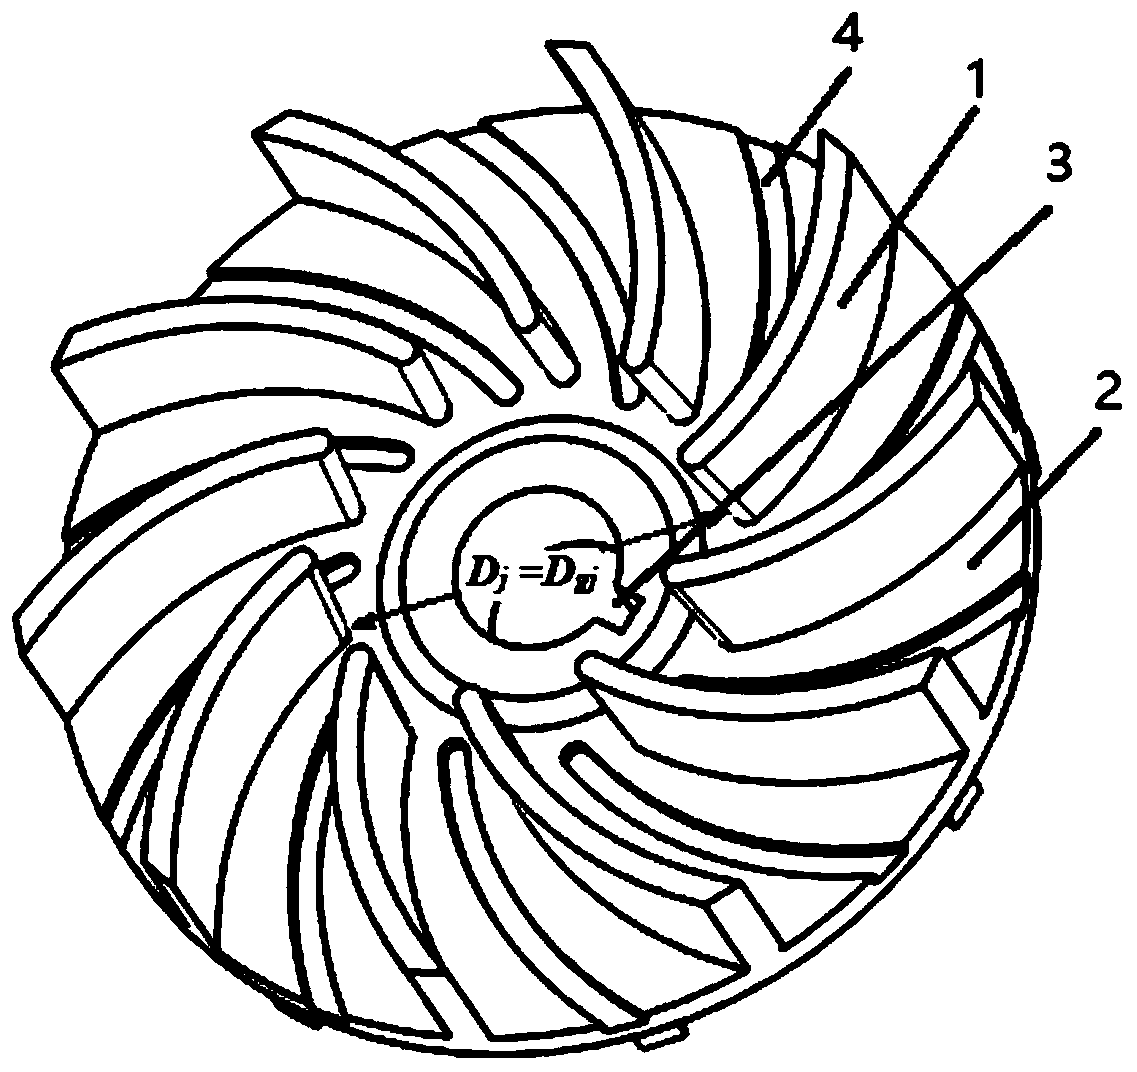 Vortex pump impeller with groove structure